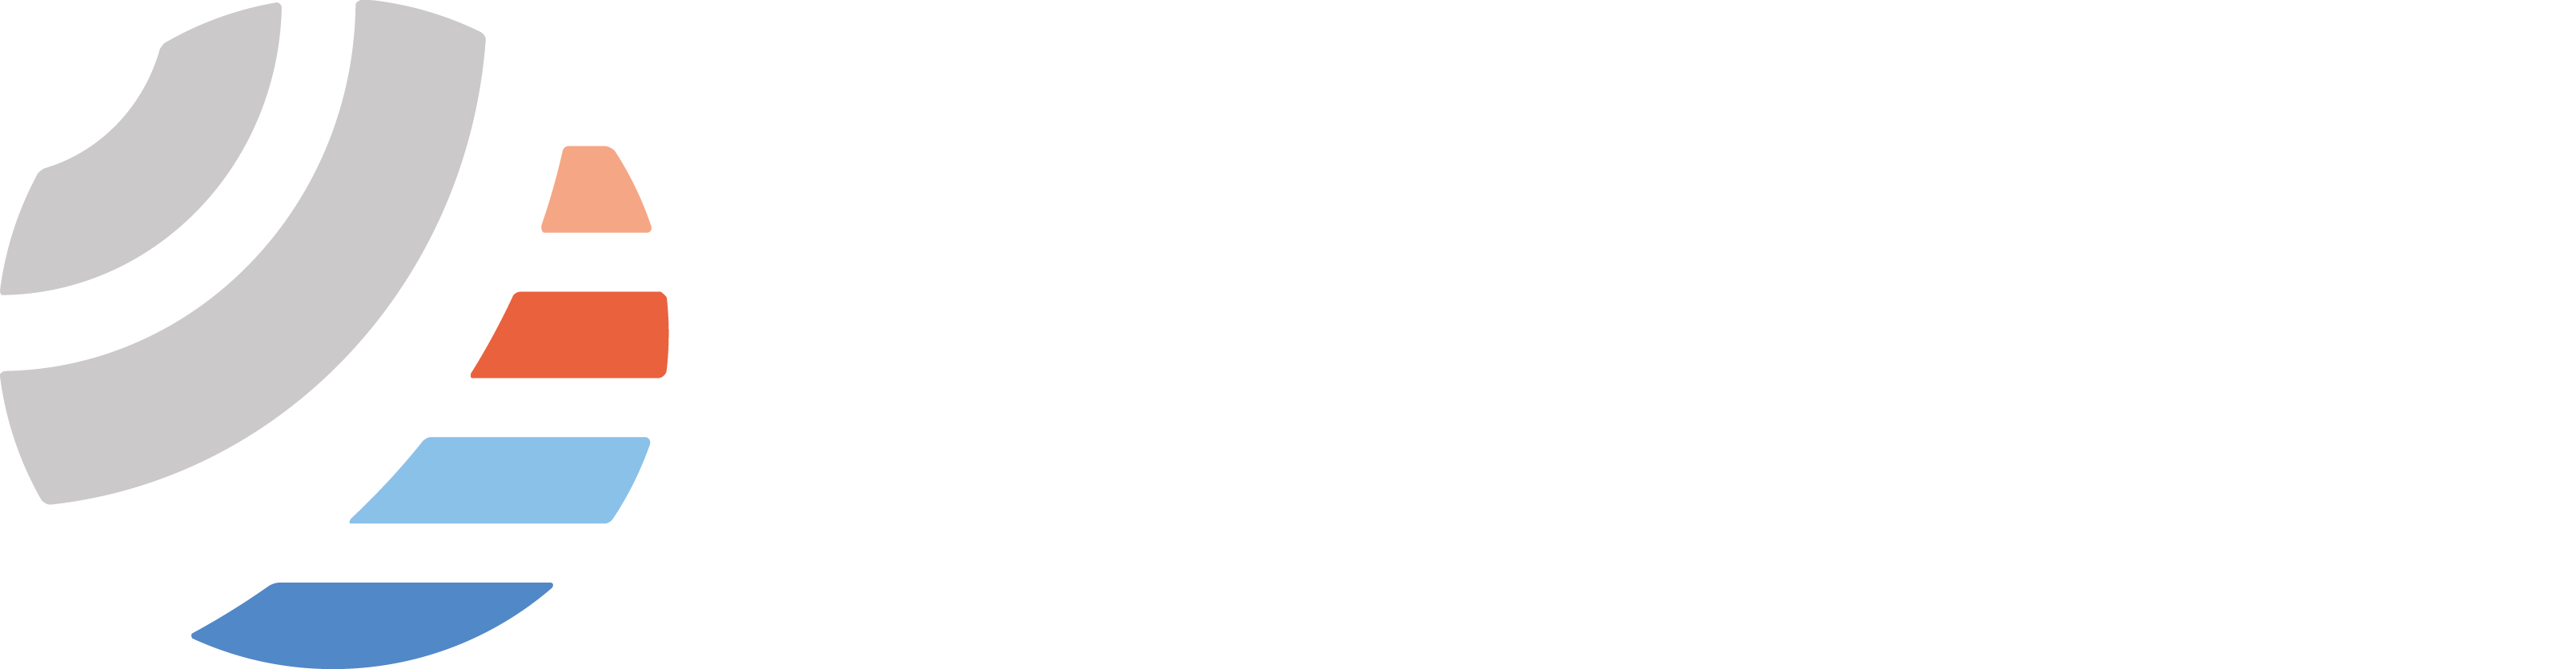 Bristol Transcription and Translation Services logo